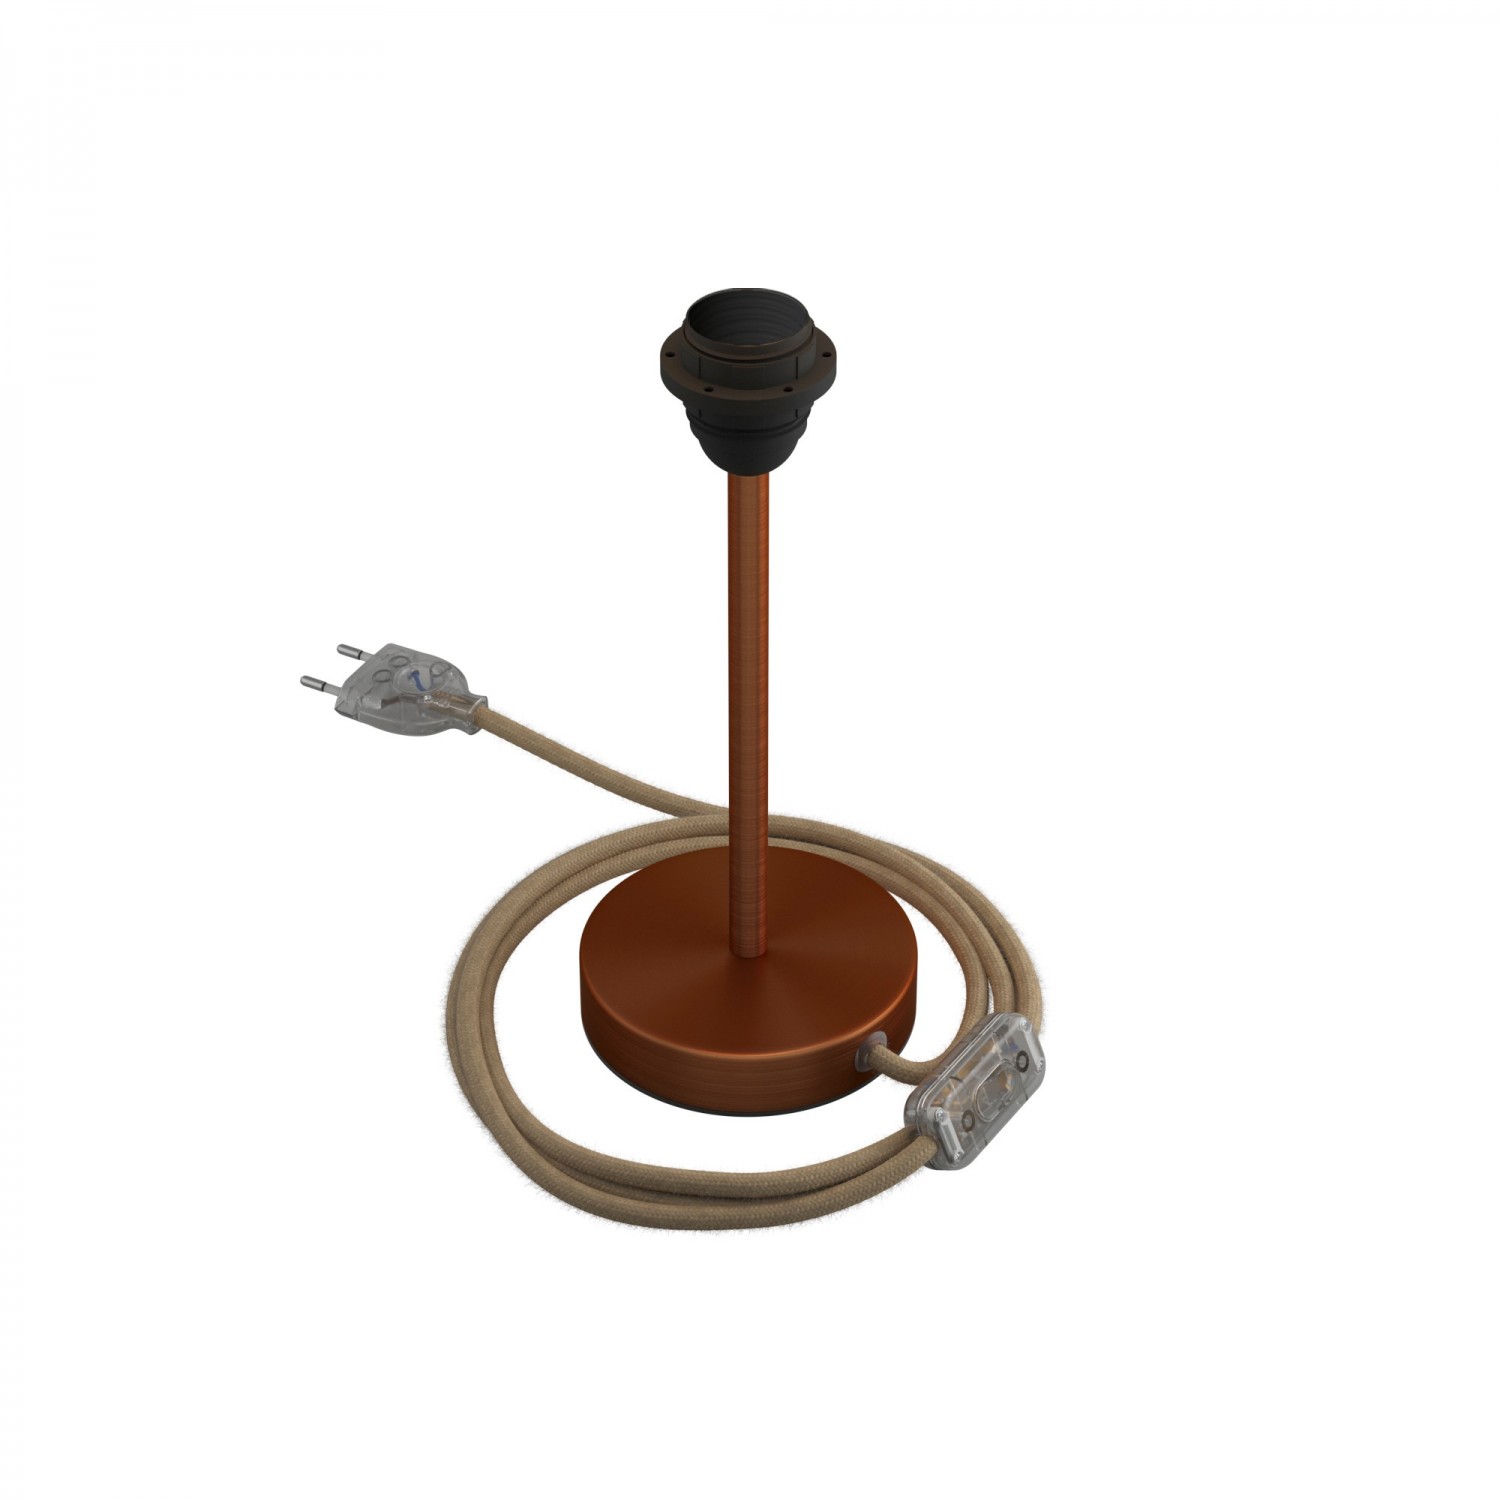 Alzaluce za sjenilo - Metalna stolna lampa